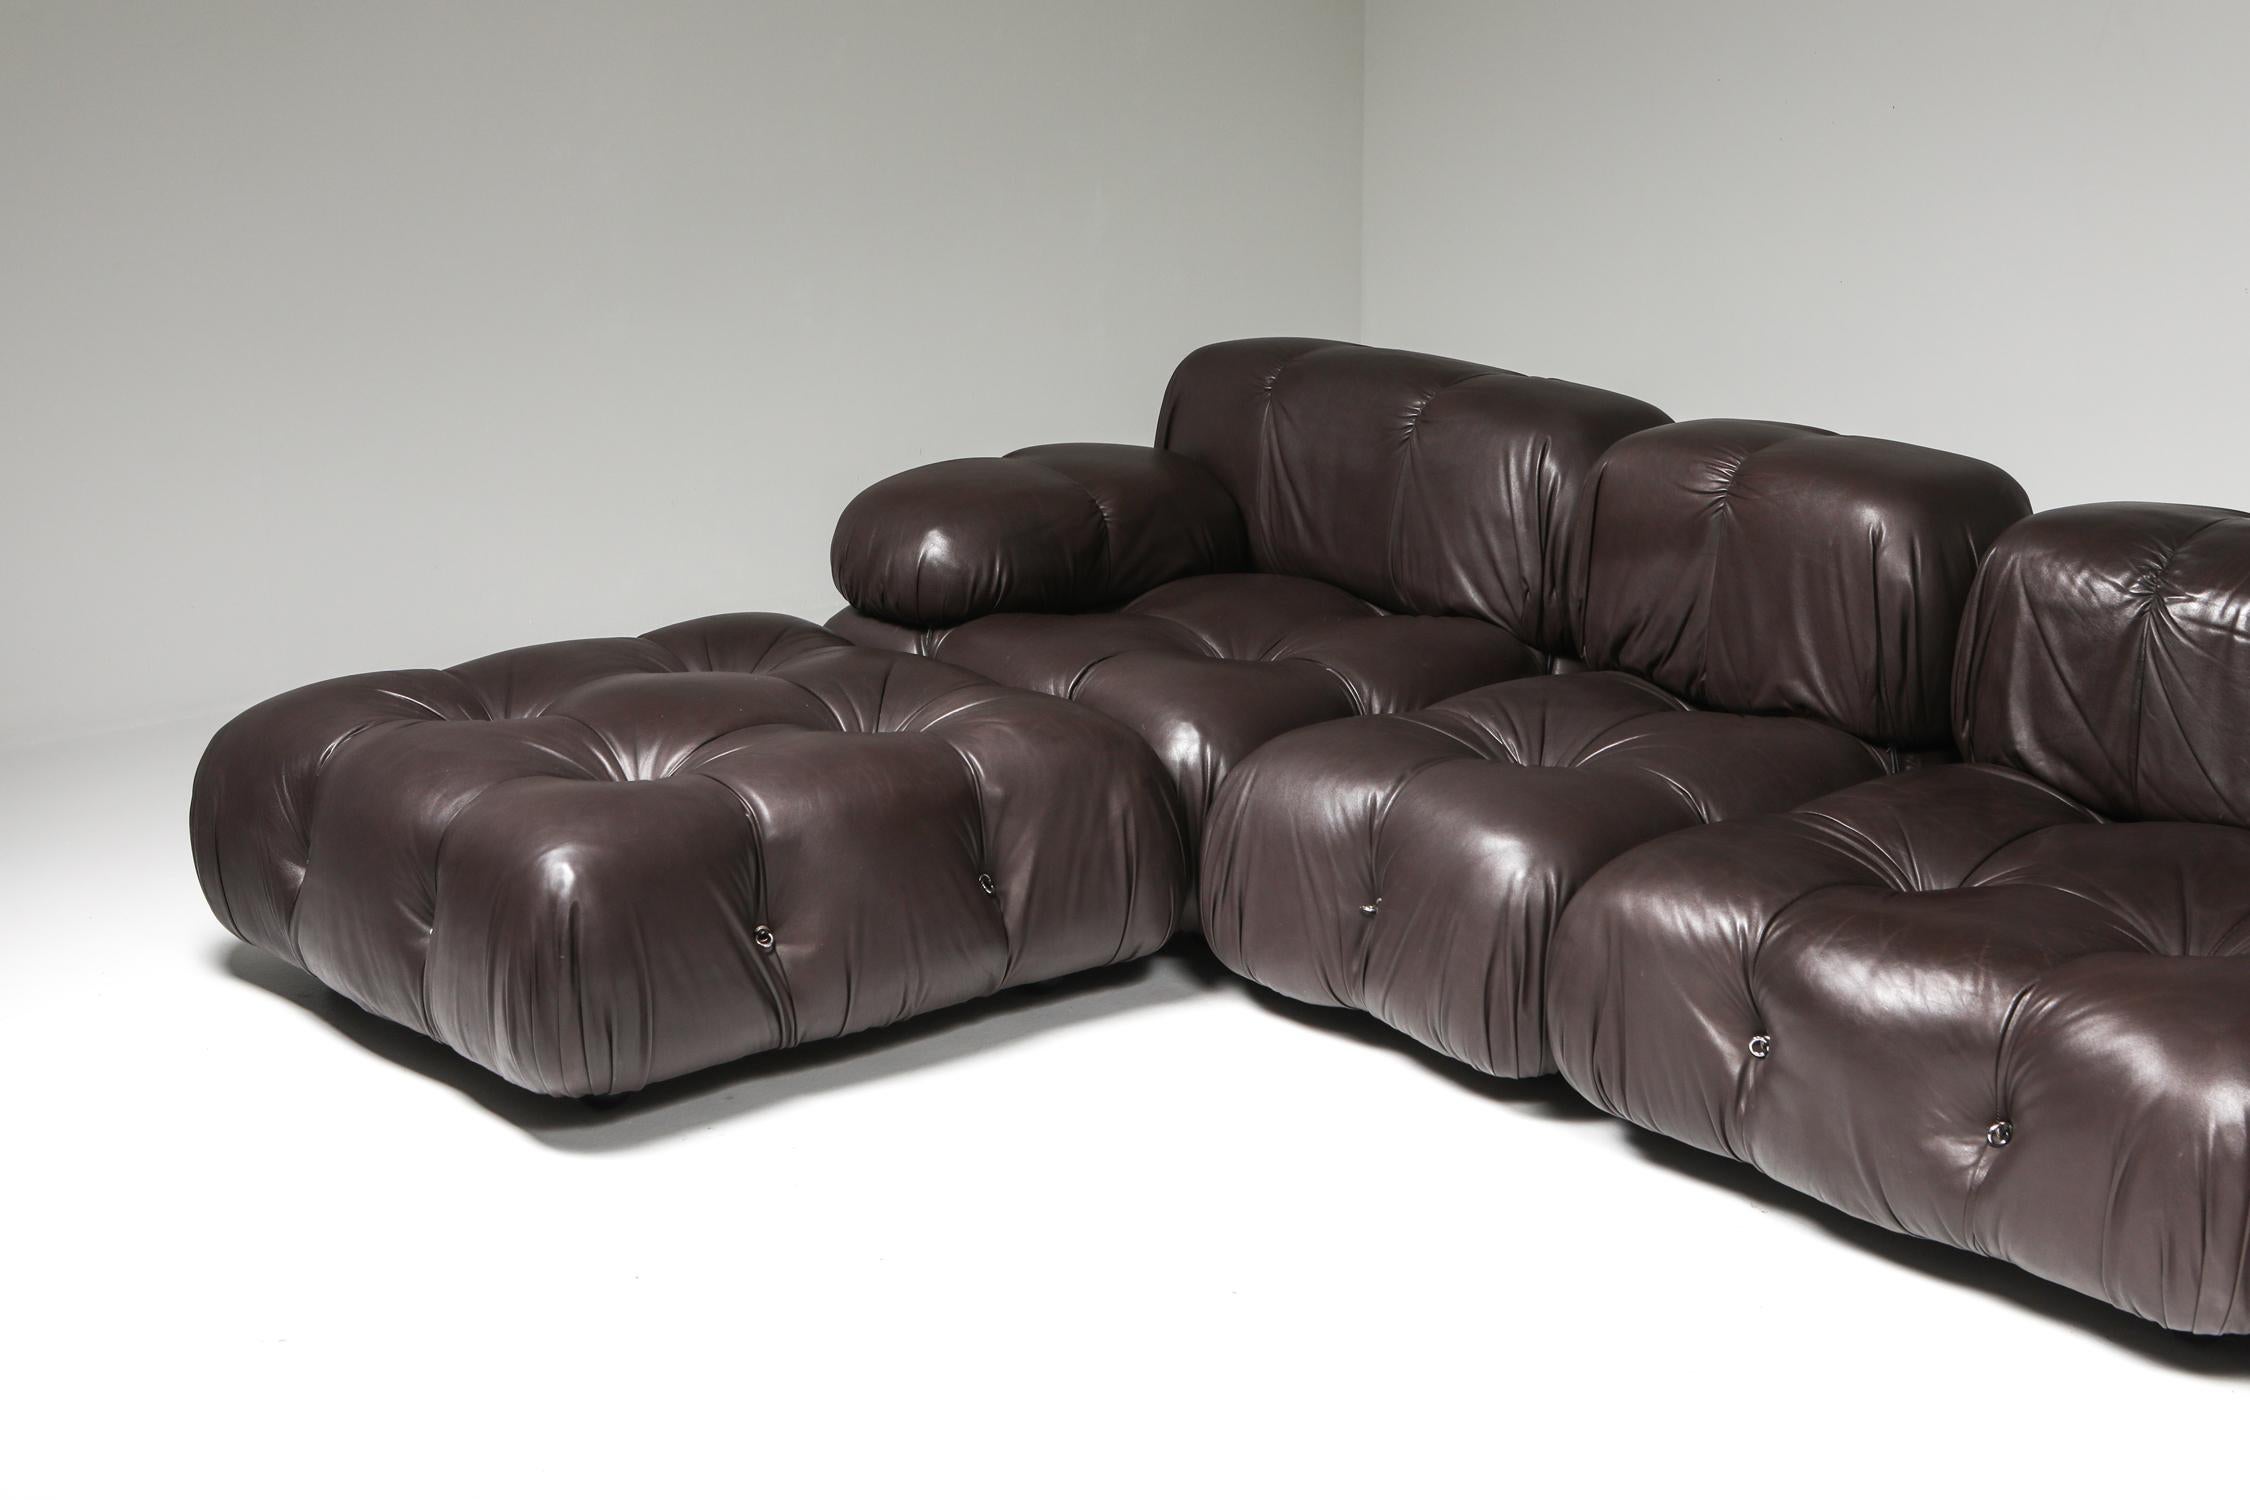 Italian Mario Bellini's Camaleonda Original Sectional Sofa in Chocolate Brown Leather